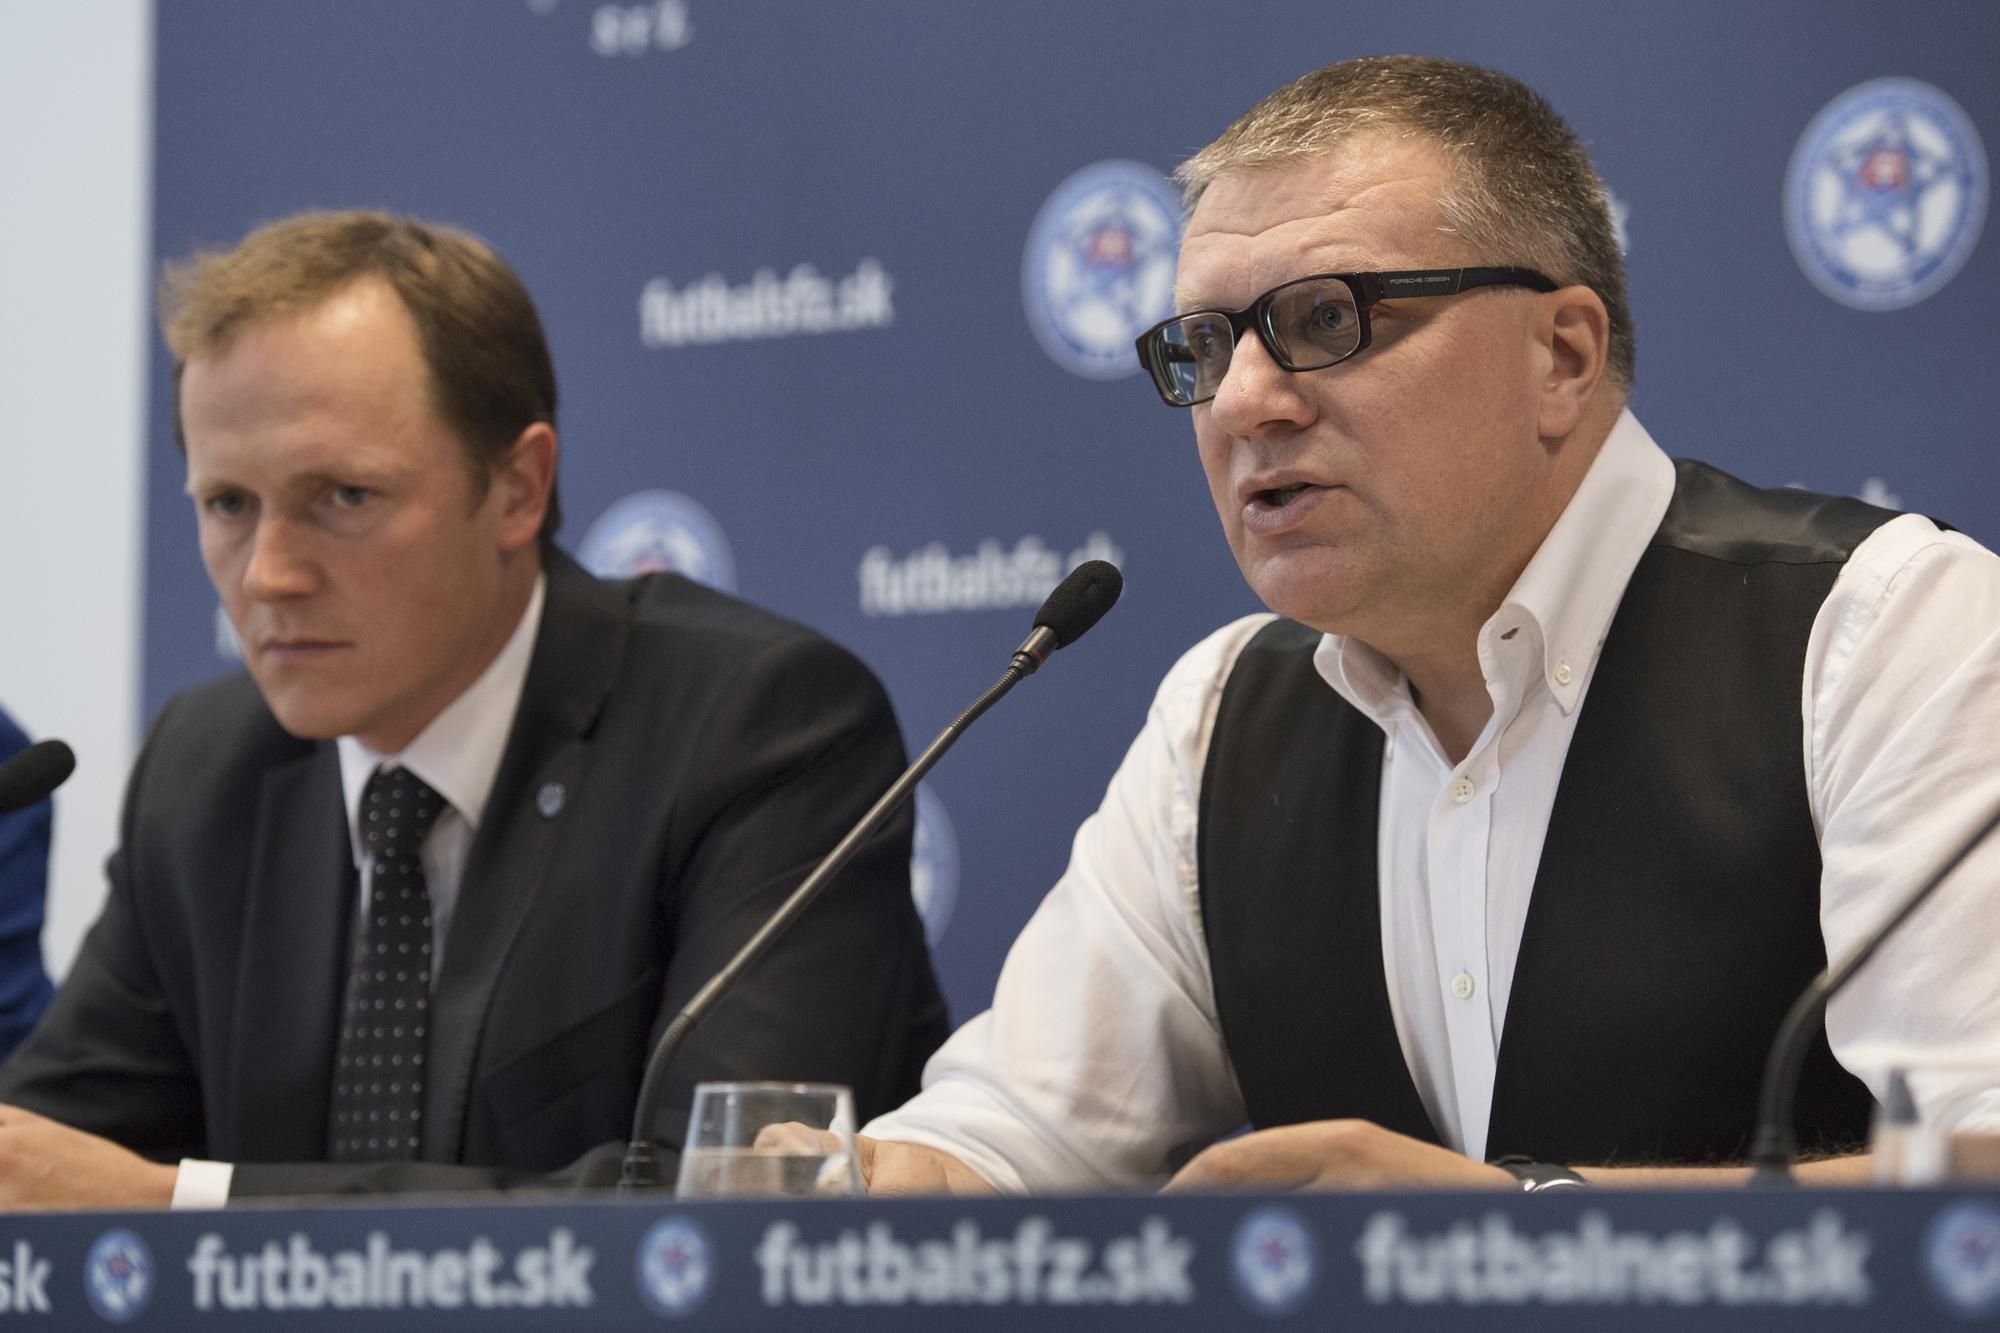 Vpravo prezident Slovenského futbalového zväzu (SFZ) Ján Kováčik a vľavo manažér integrity futbalu Peter Dedík